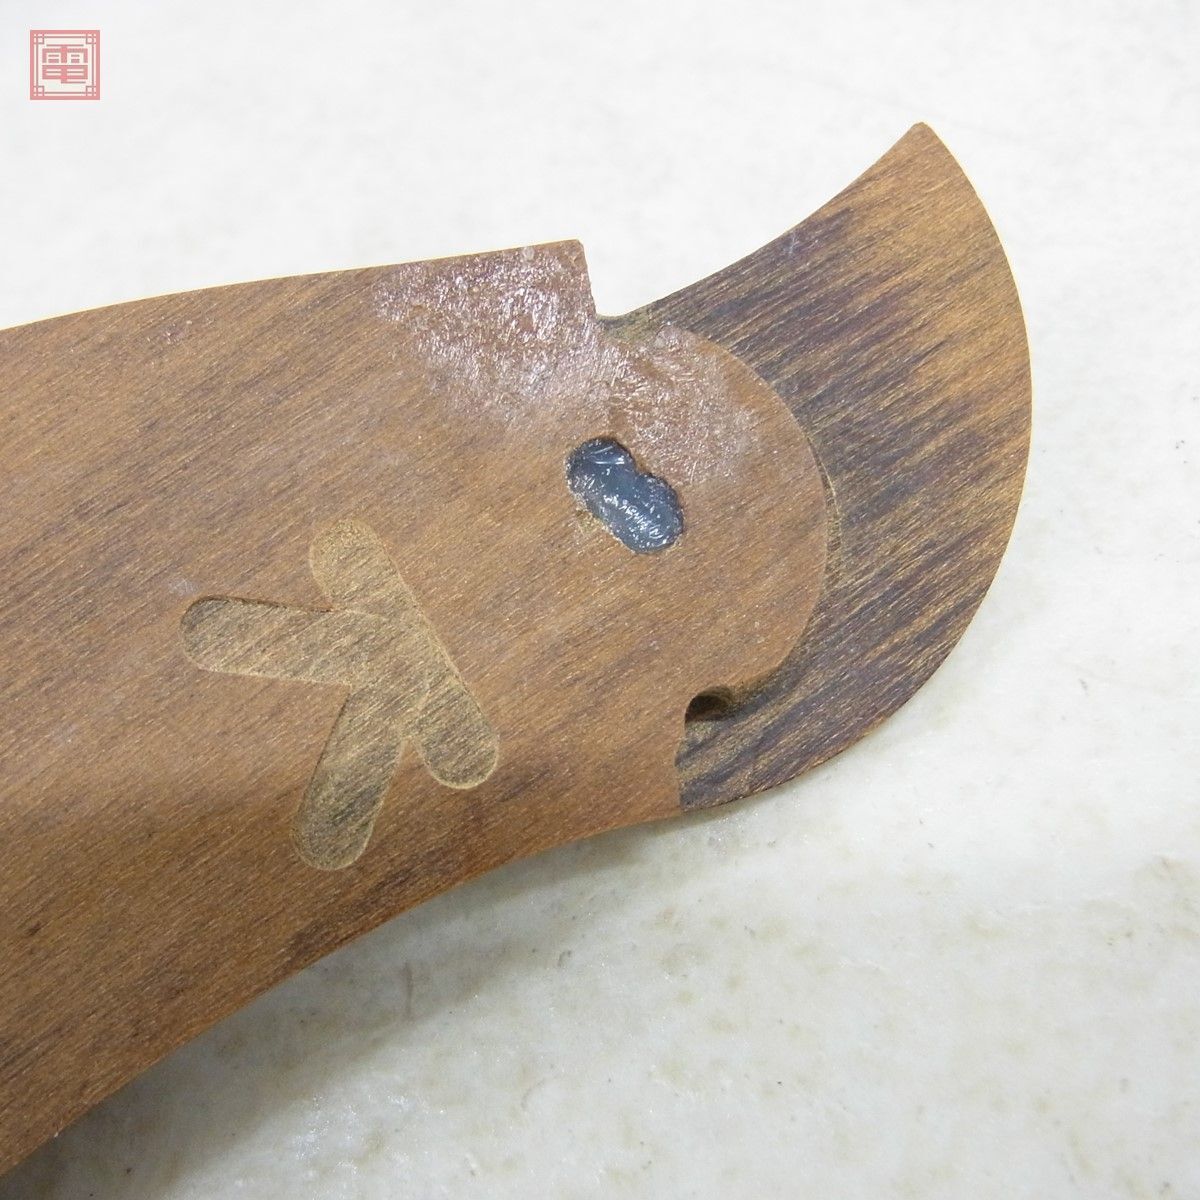 ALTAMONTaru сачок nto из дерева рукоятка S&W K рама для раунд bat medali on есть M19 M66 combat Magnum [PP